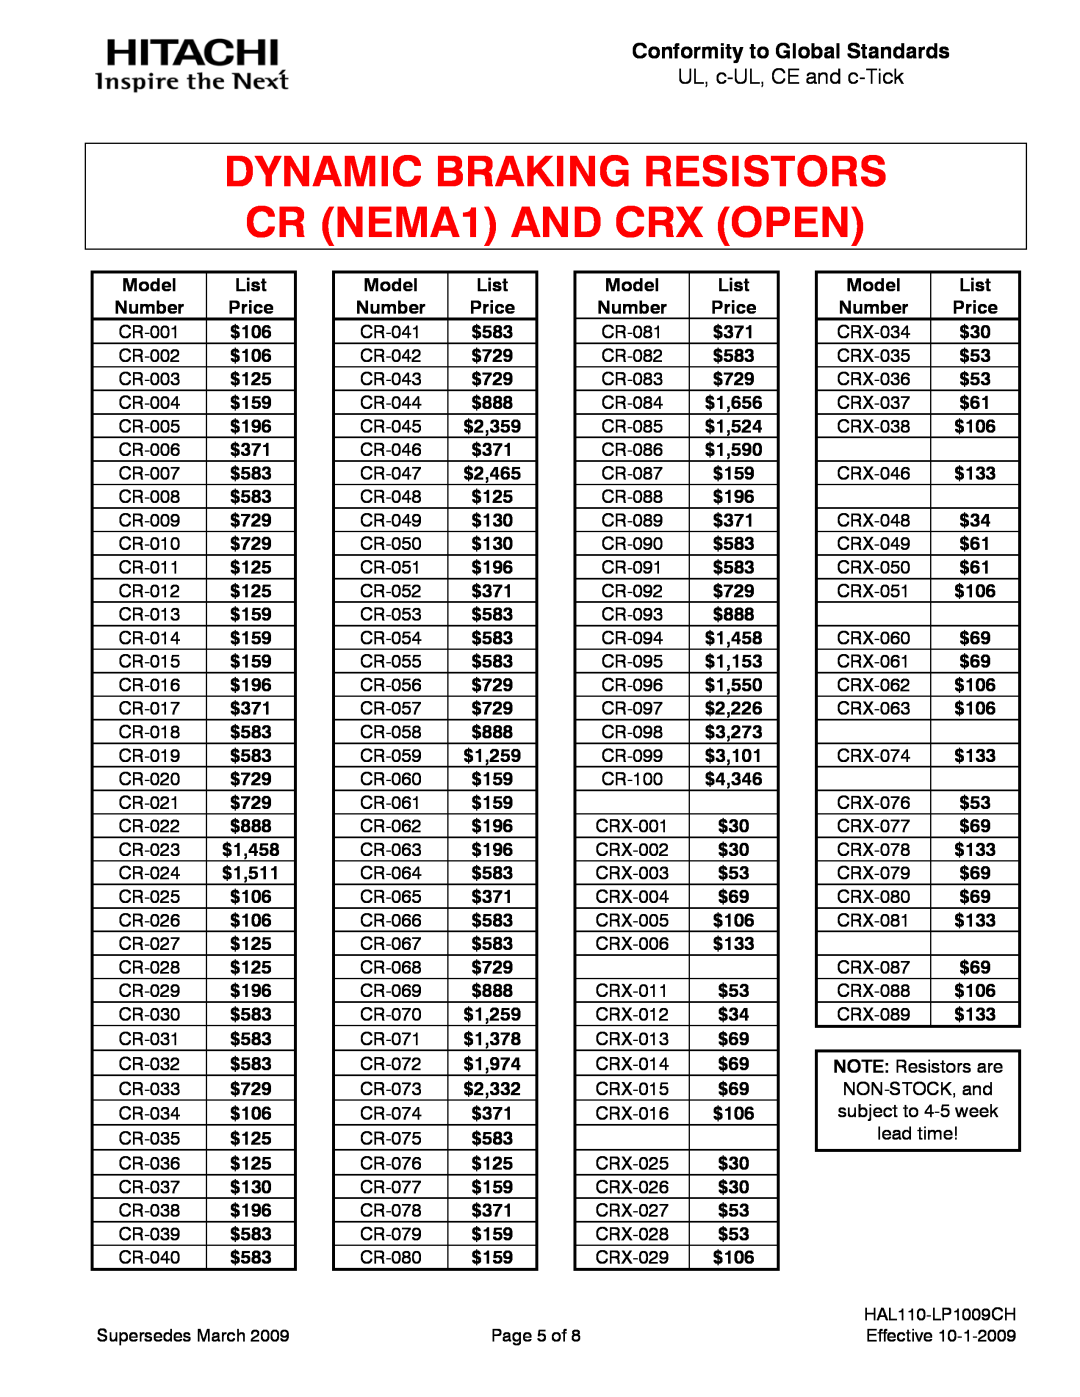 Hitachi sj200, SJ700 manual DYNAMIC BRAKING RESISTORS CR NEMA1 AND CRX OPEN, Conformity to Global Standards, CR-081 